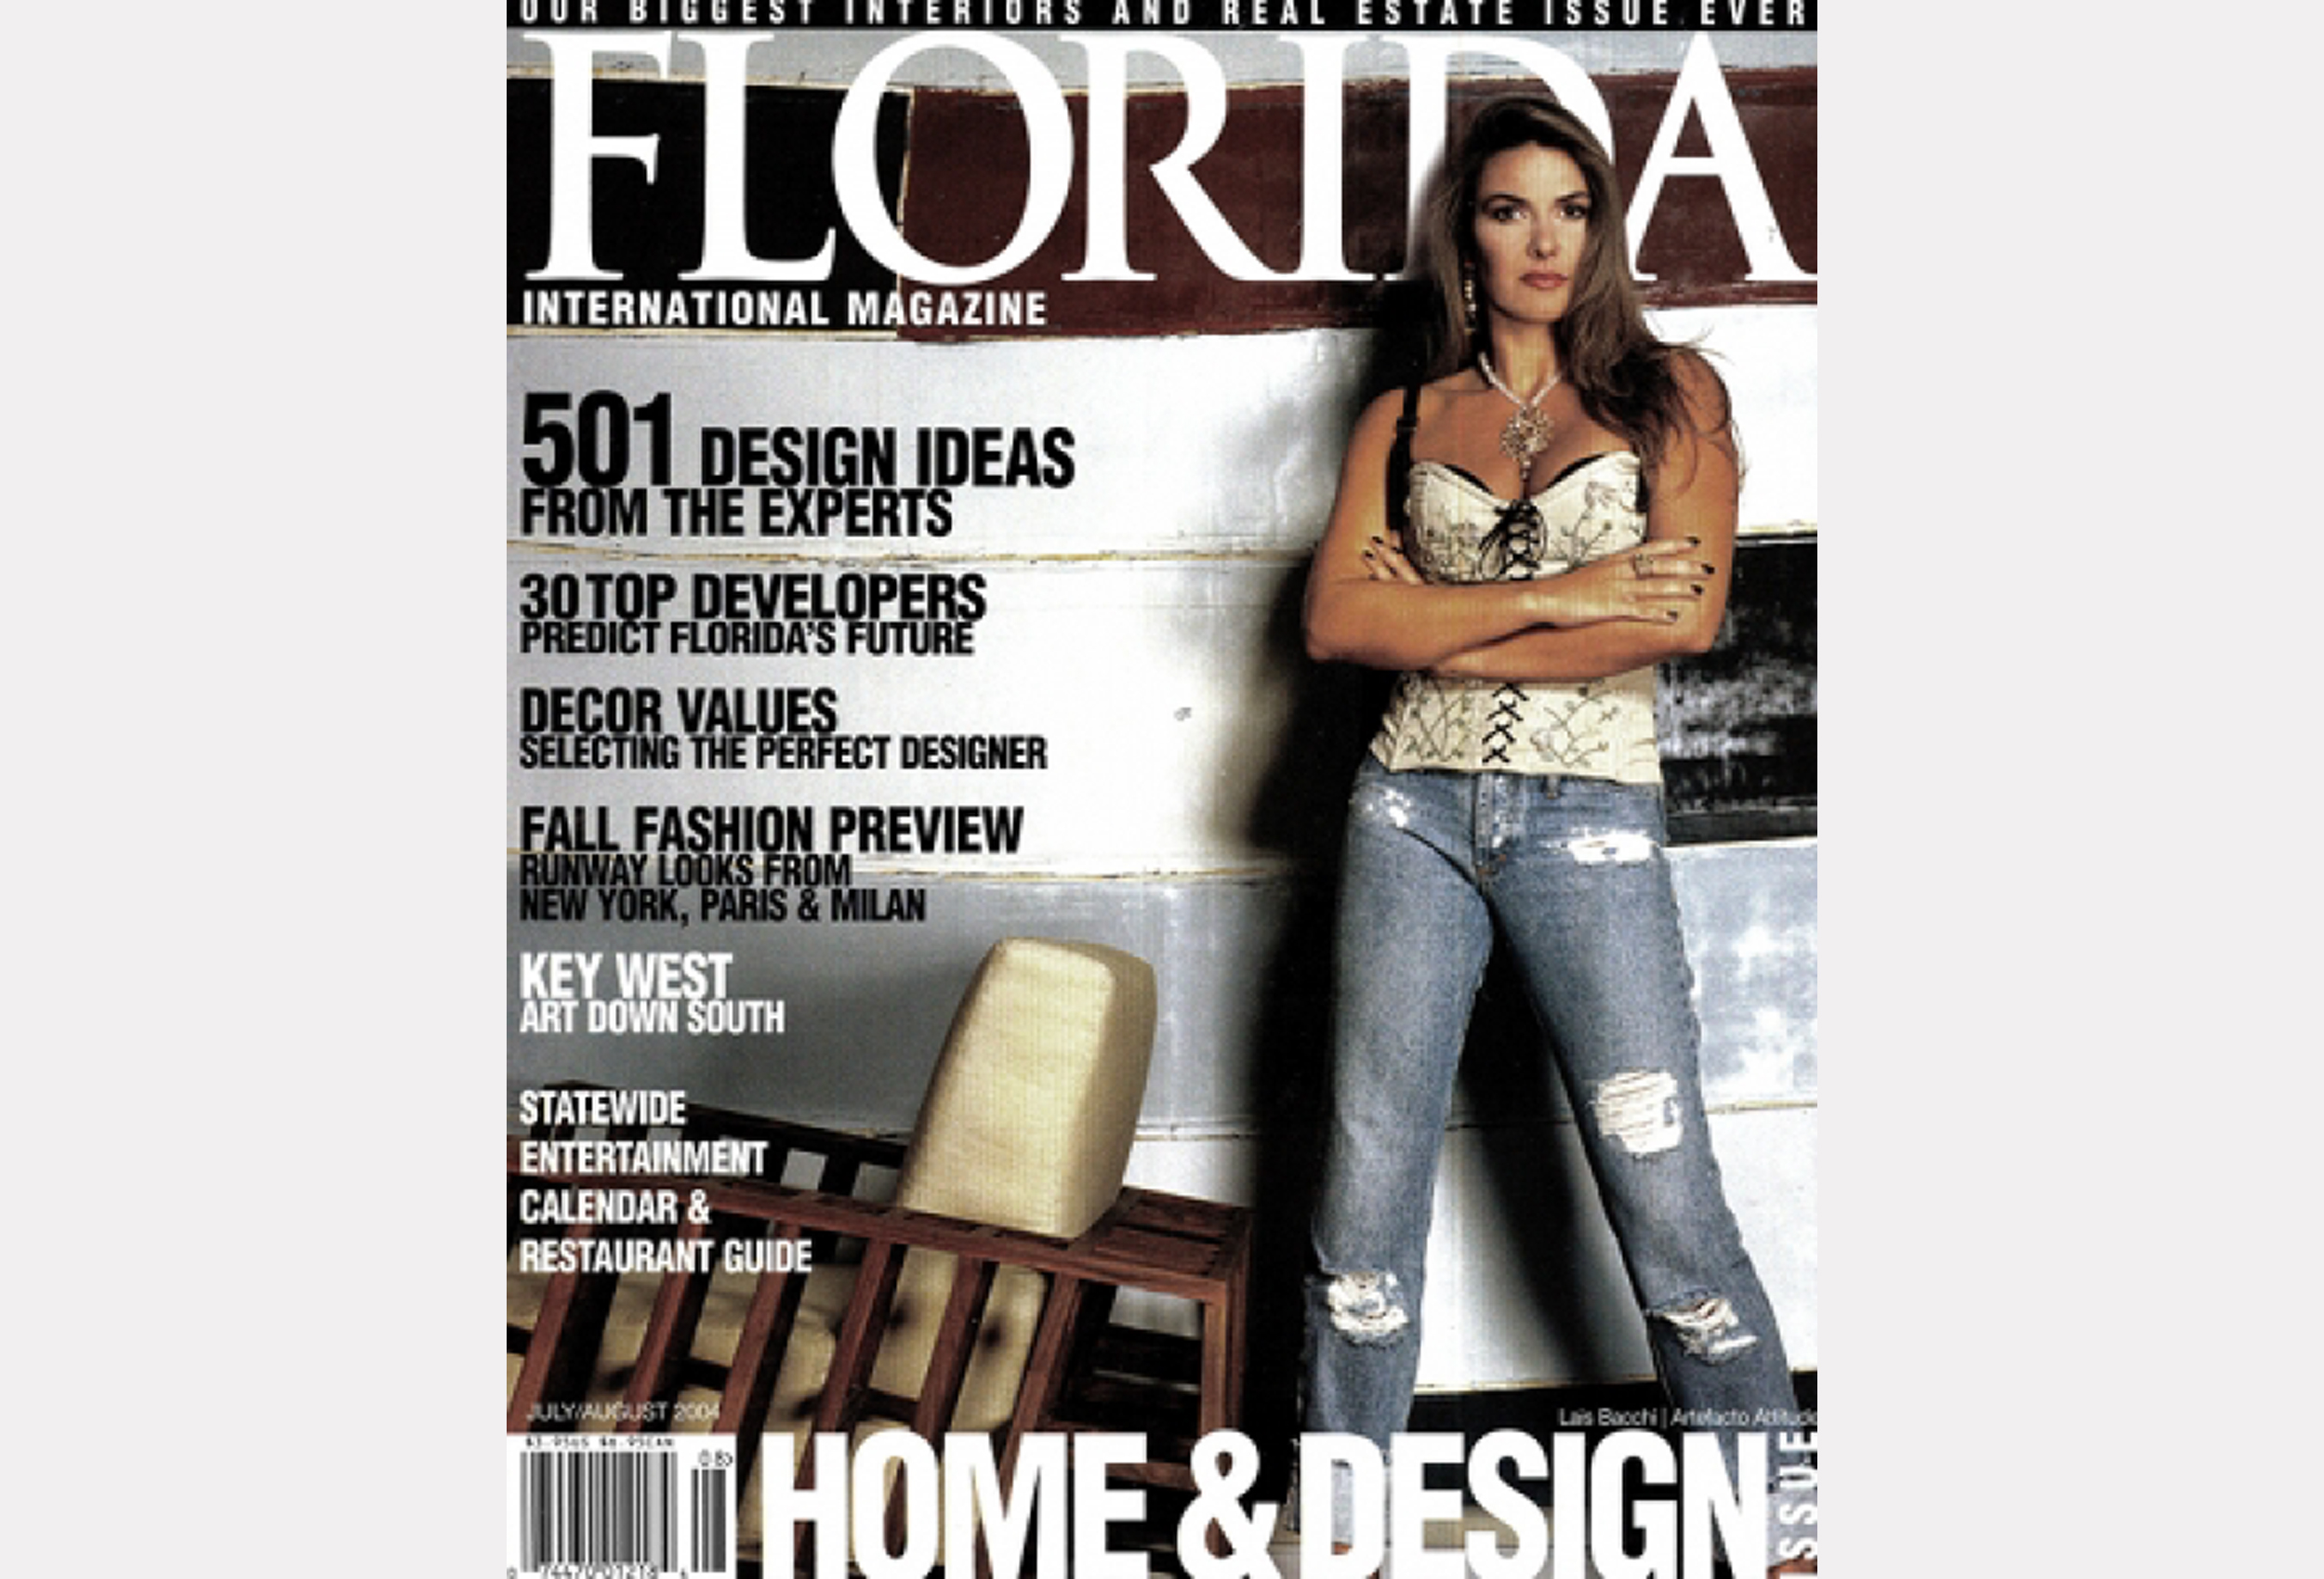 Florida International Magazine 2004-1.jpg